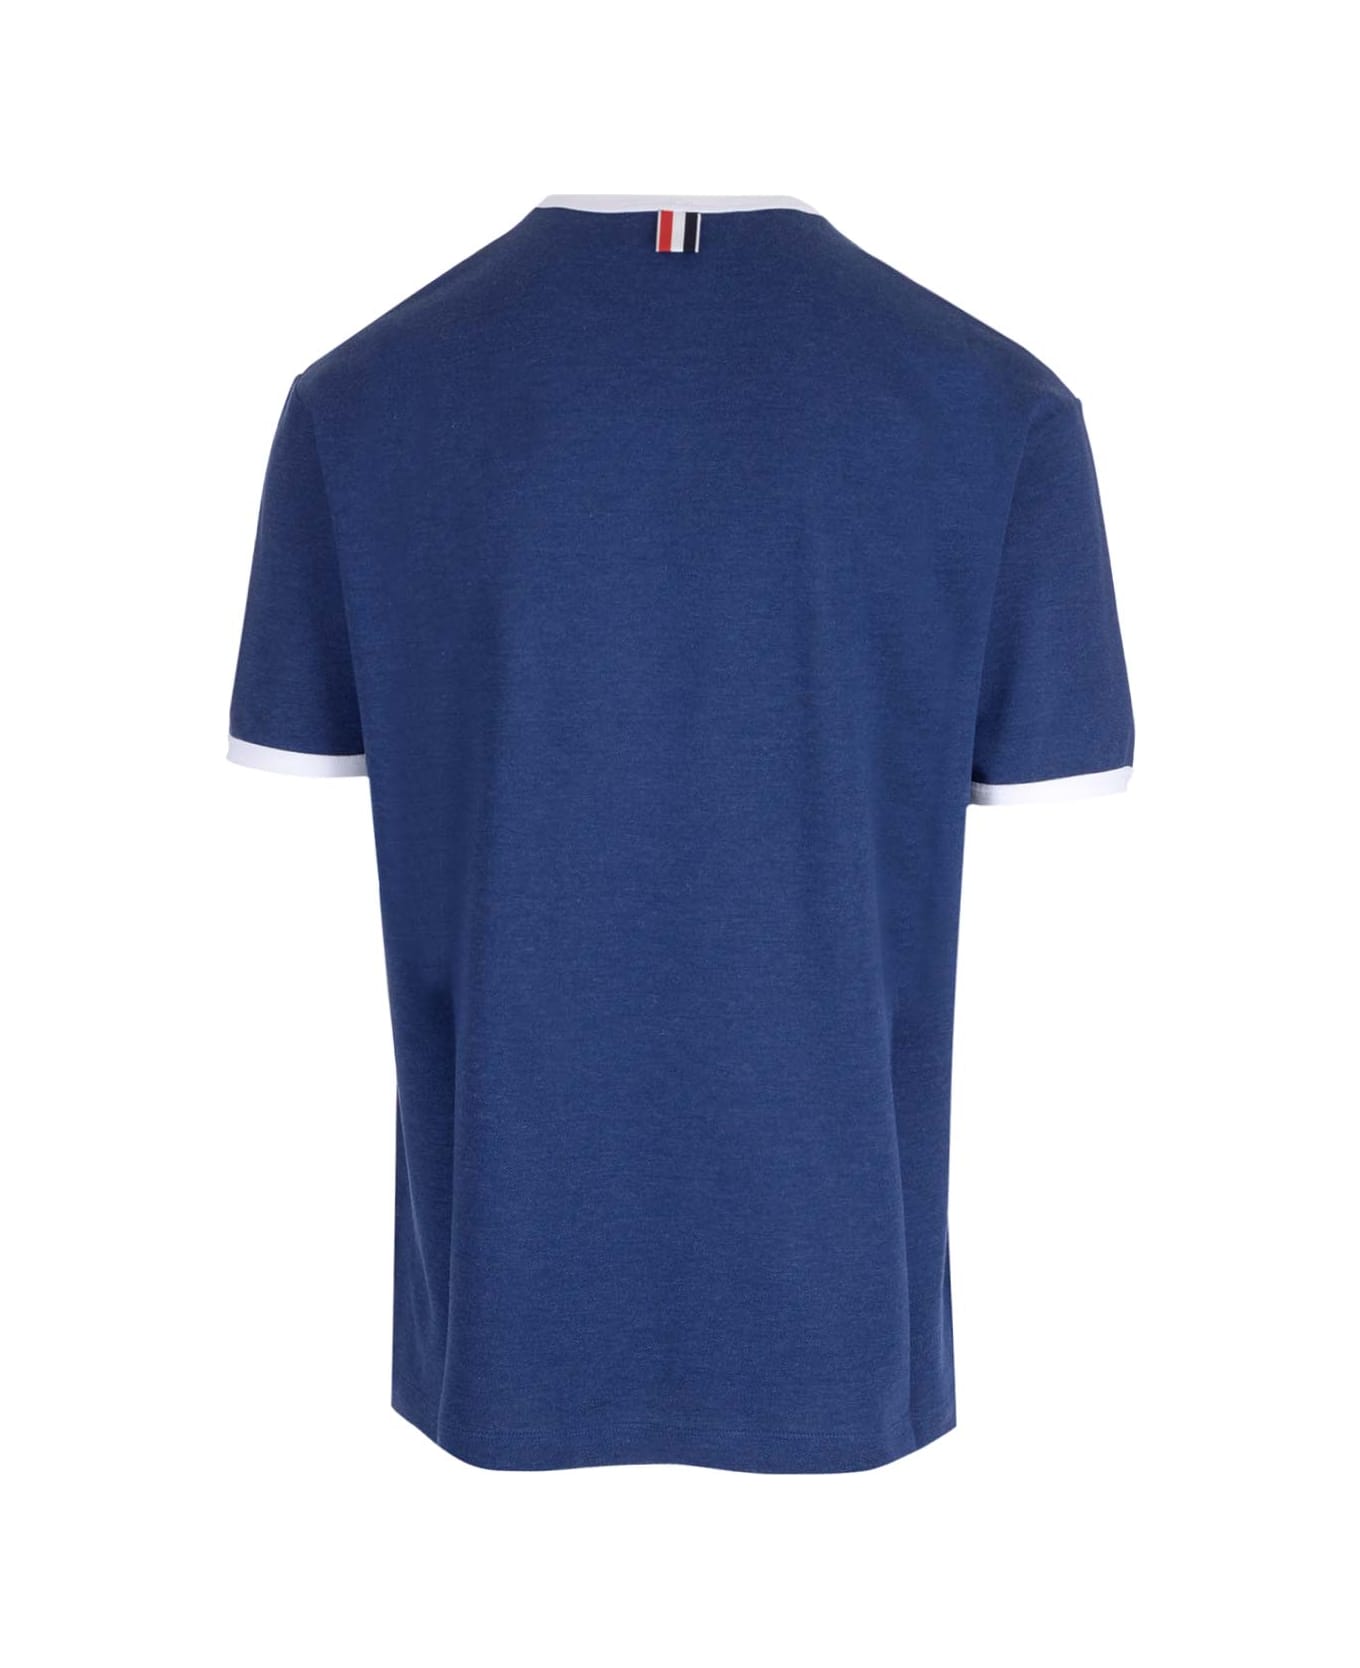 Thom Browne Cotton Piqu -shirt - NAVY